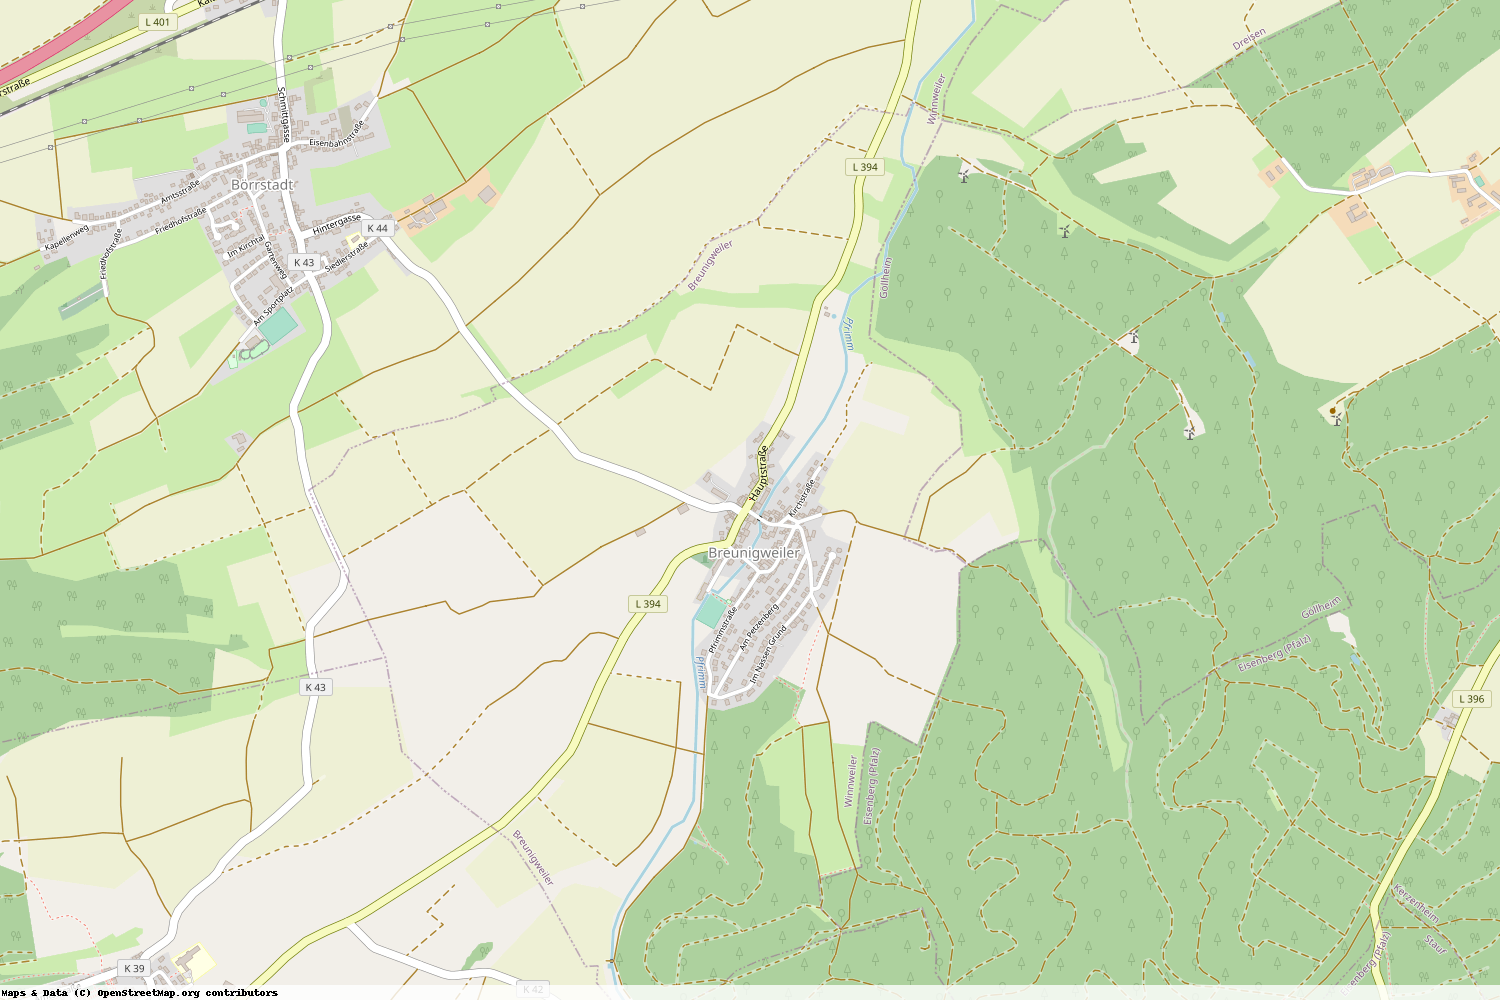 Ist gerade Stromausfall in Rheinland-Pfalz - Donnersbergkreis - Breunigweiler?